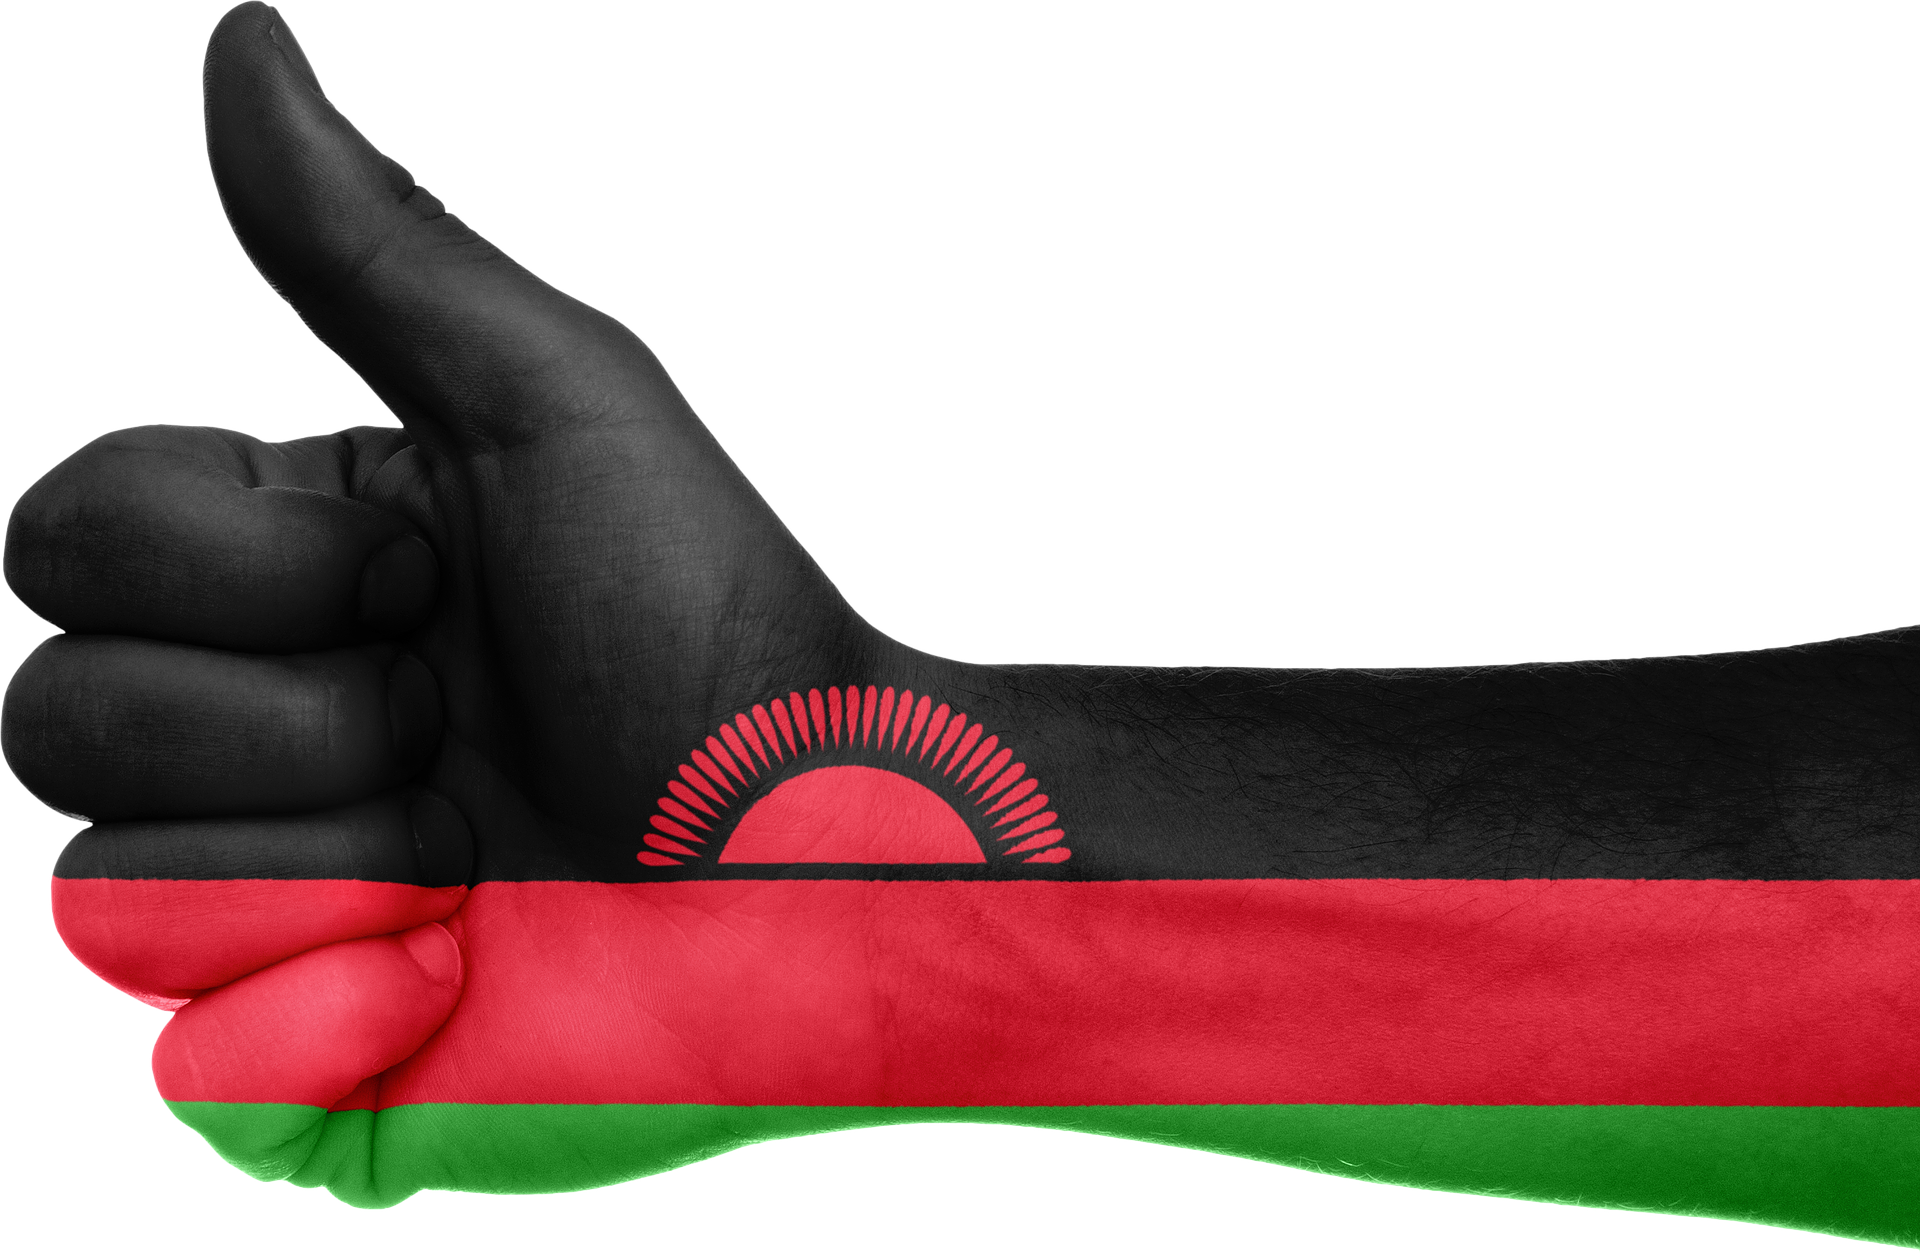 malawi_flag_thumbs_up-2.png